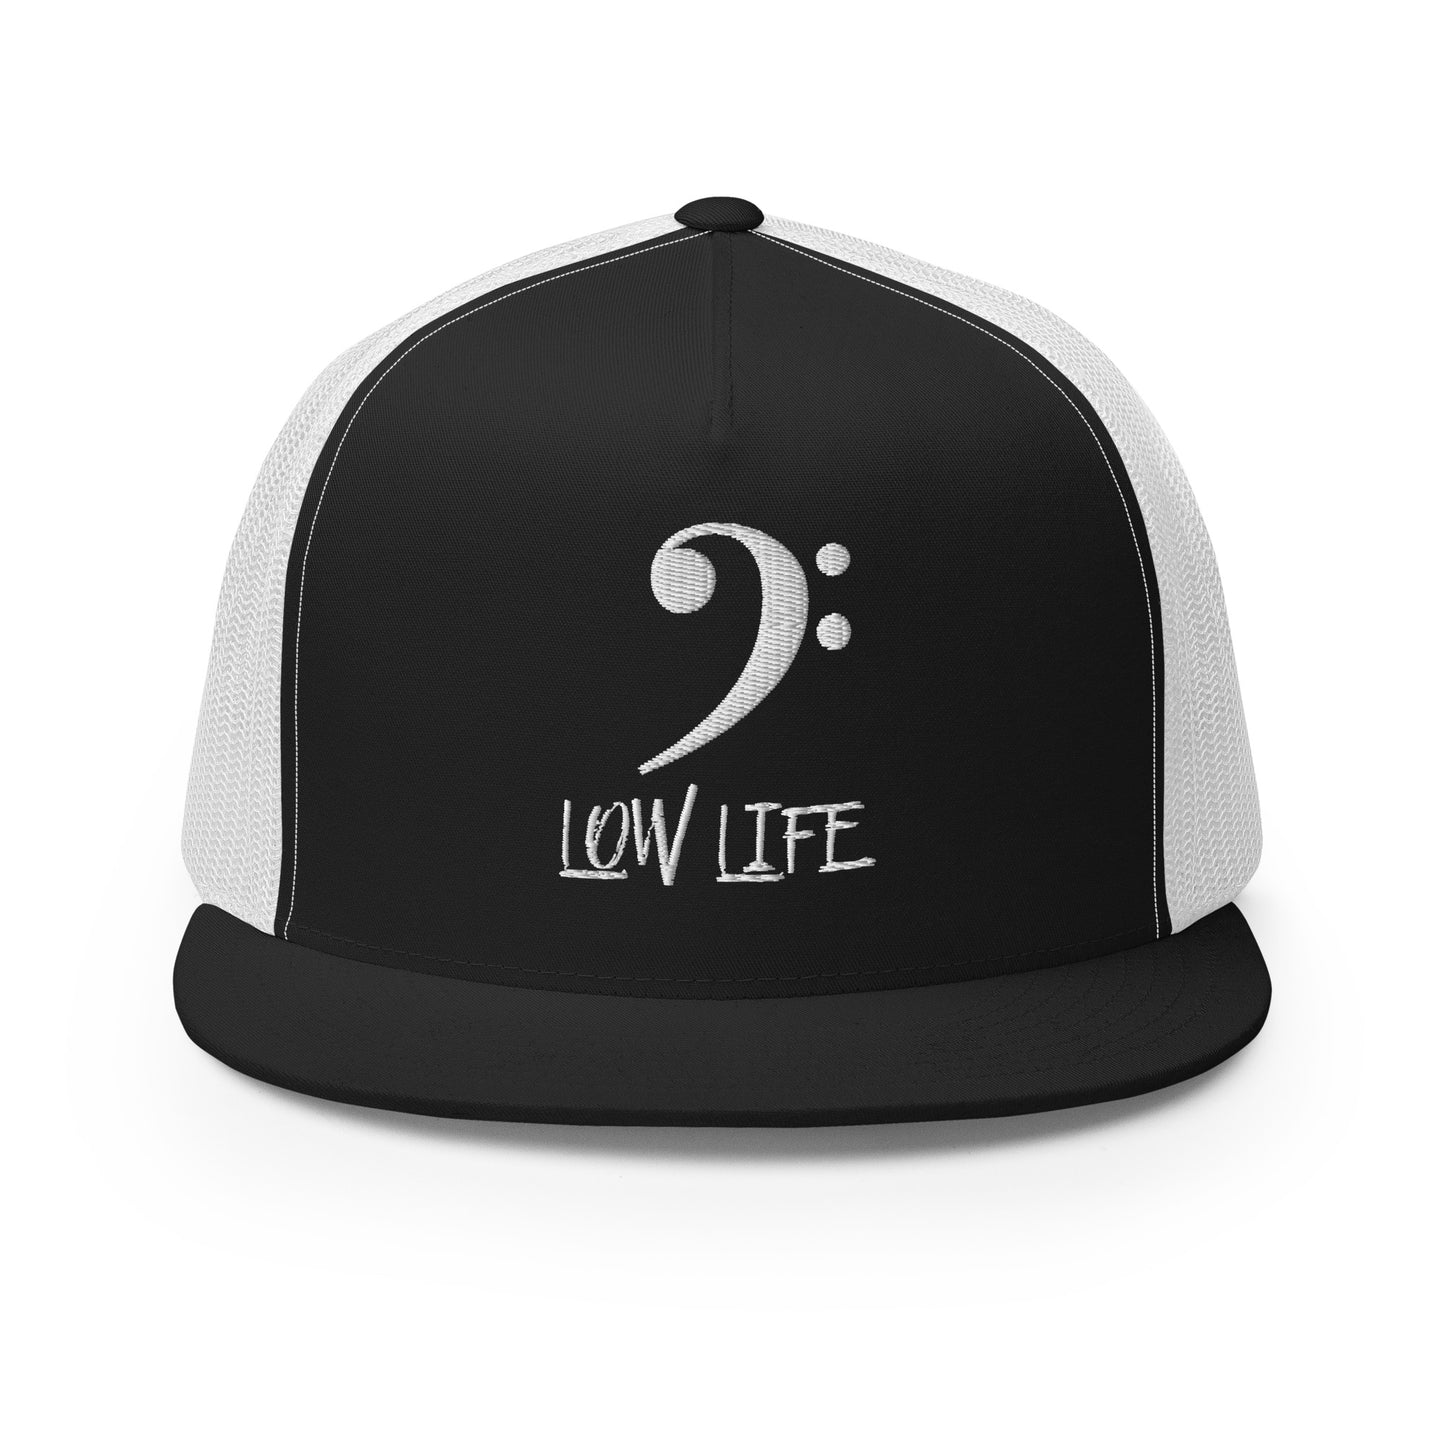 Away Team - Low Life Flat Bill Trucker Cap